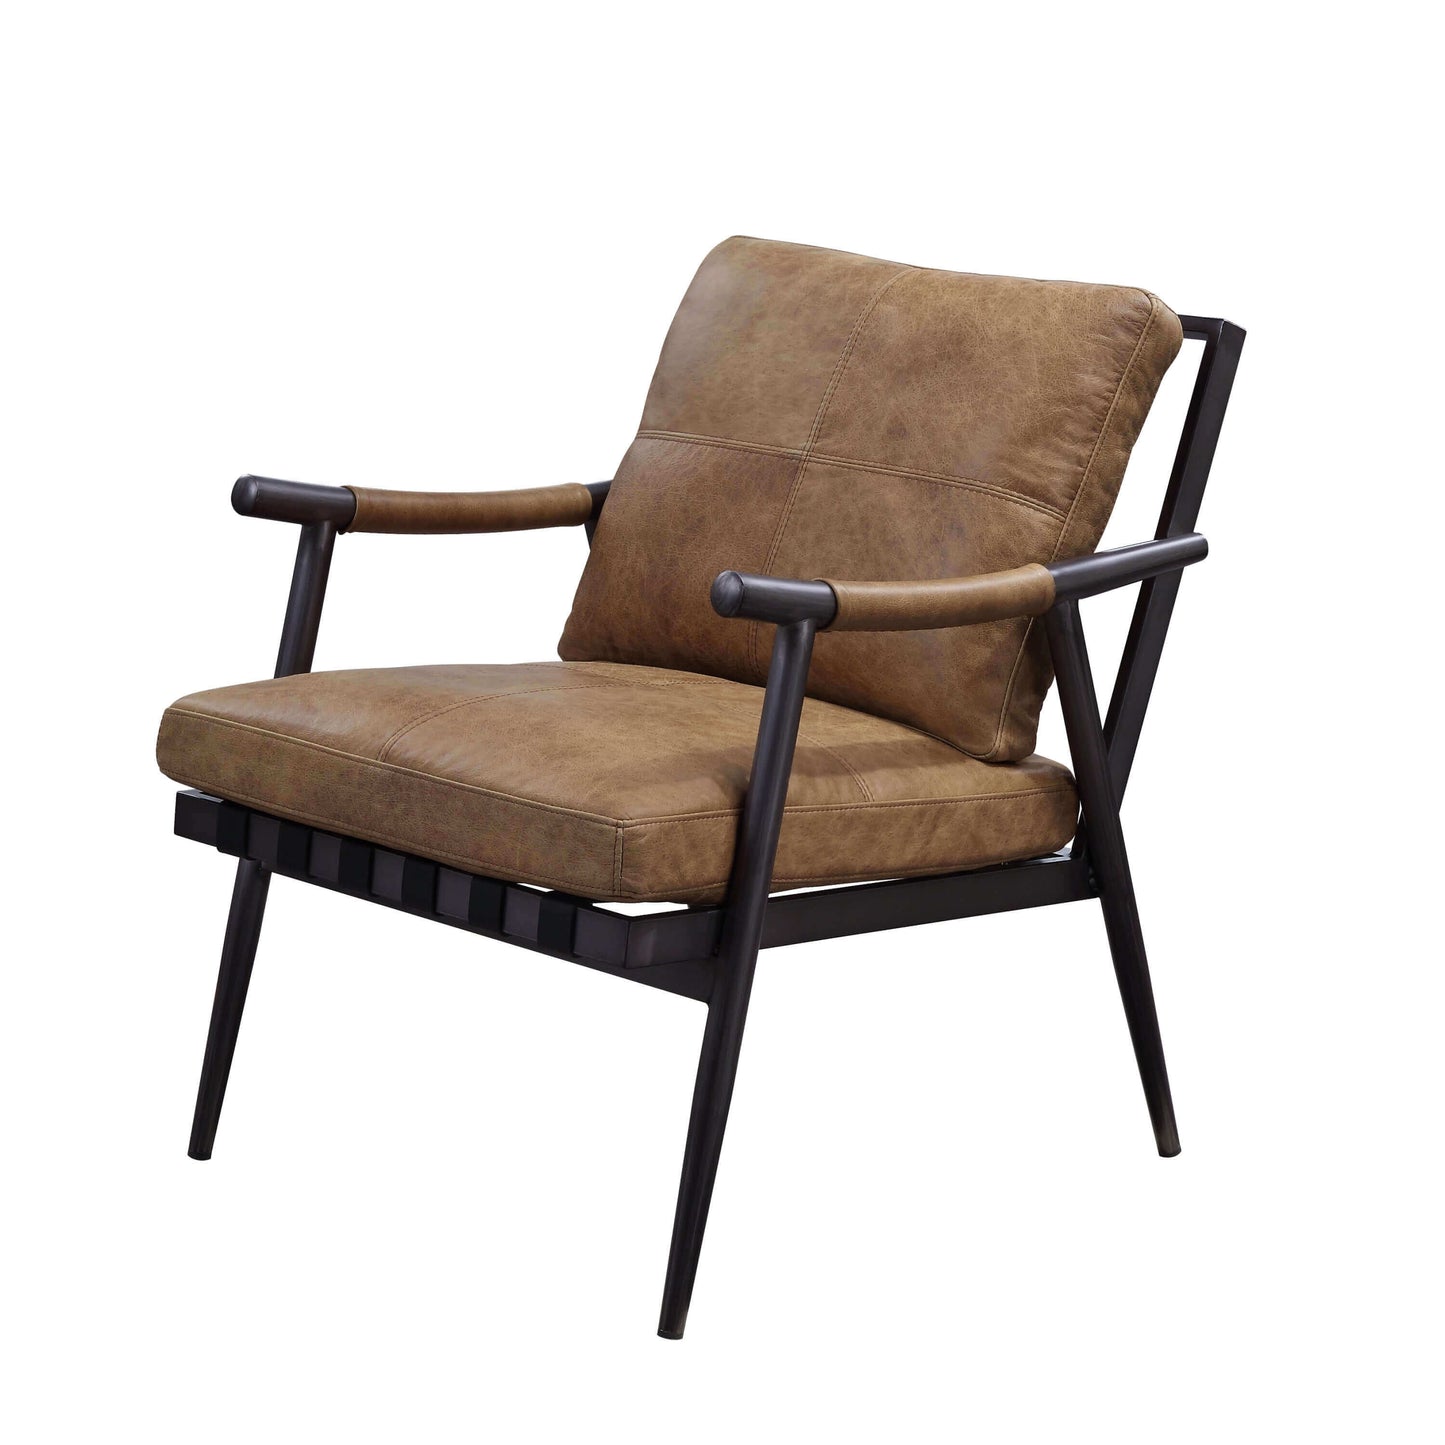 Anzan Accent Chair in Berham Chestnut Top Grain Leather & Matt Iron Base - Revel Sofa 